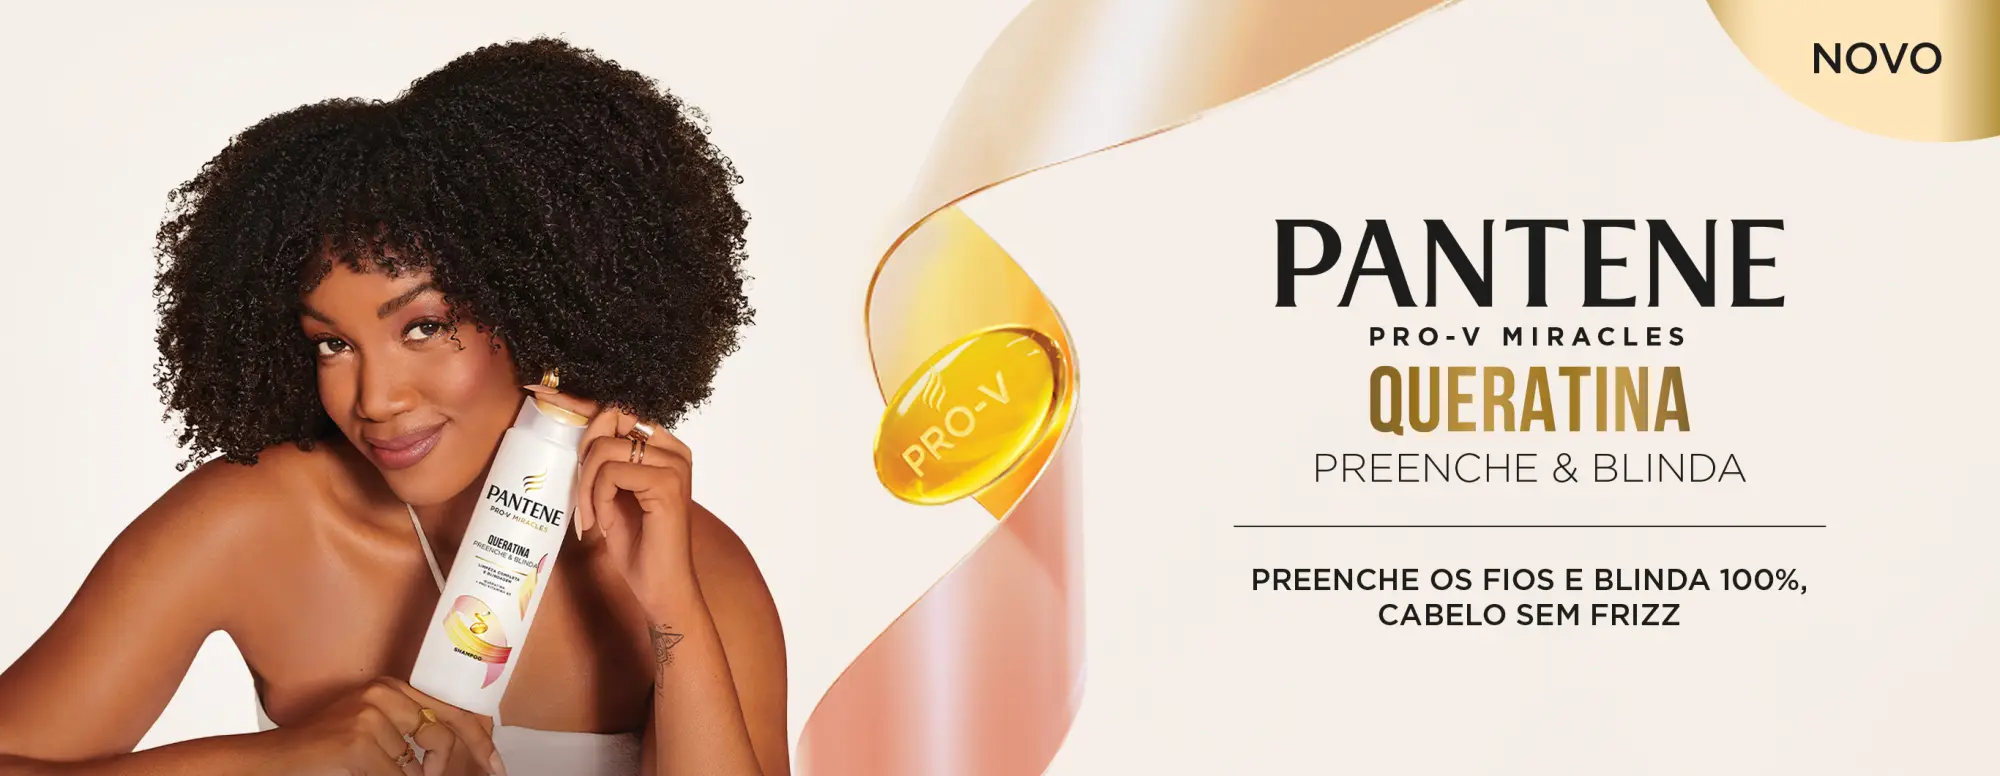 Nova linha - Pantene Pro-V Miracles Queratina preenche & protege, preenche os fios e blinda 100%, cabelo sem frizz.